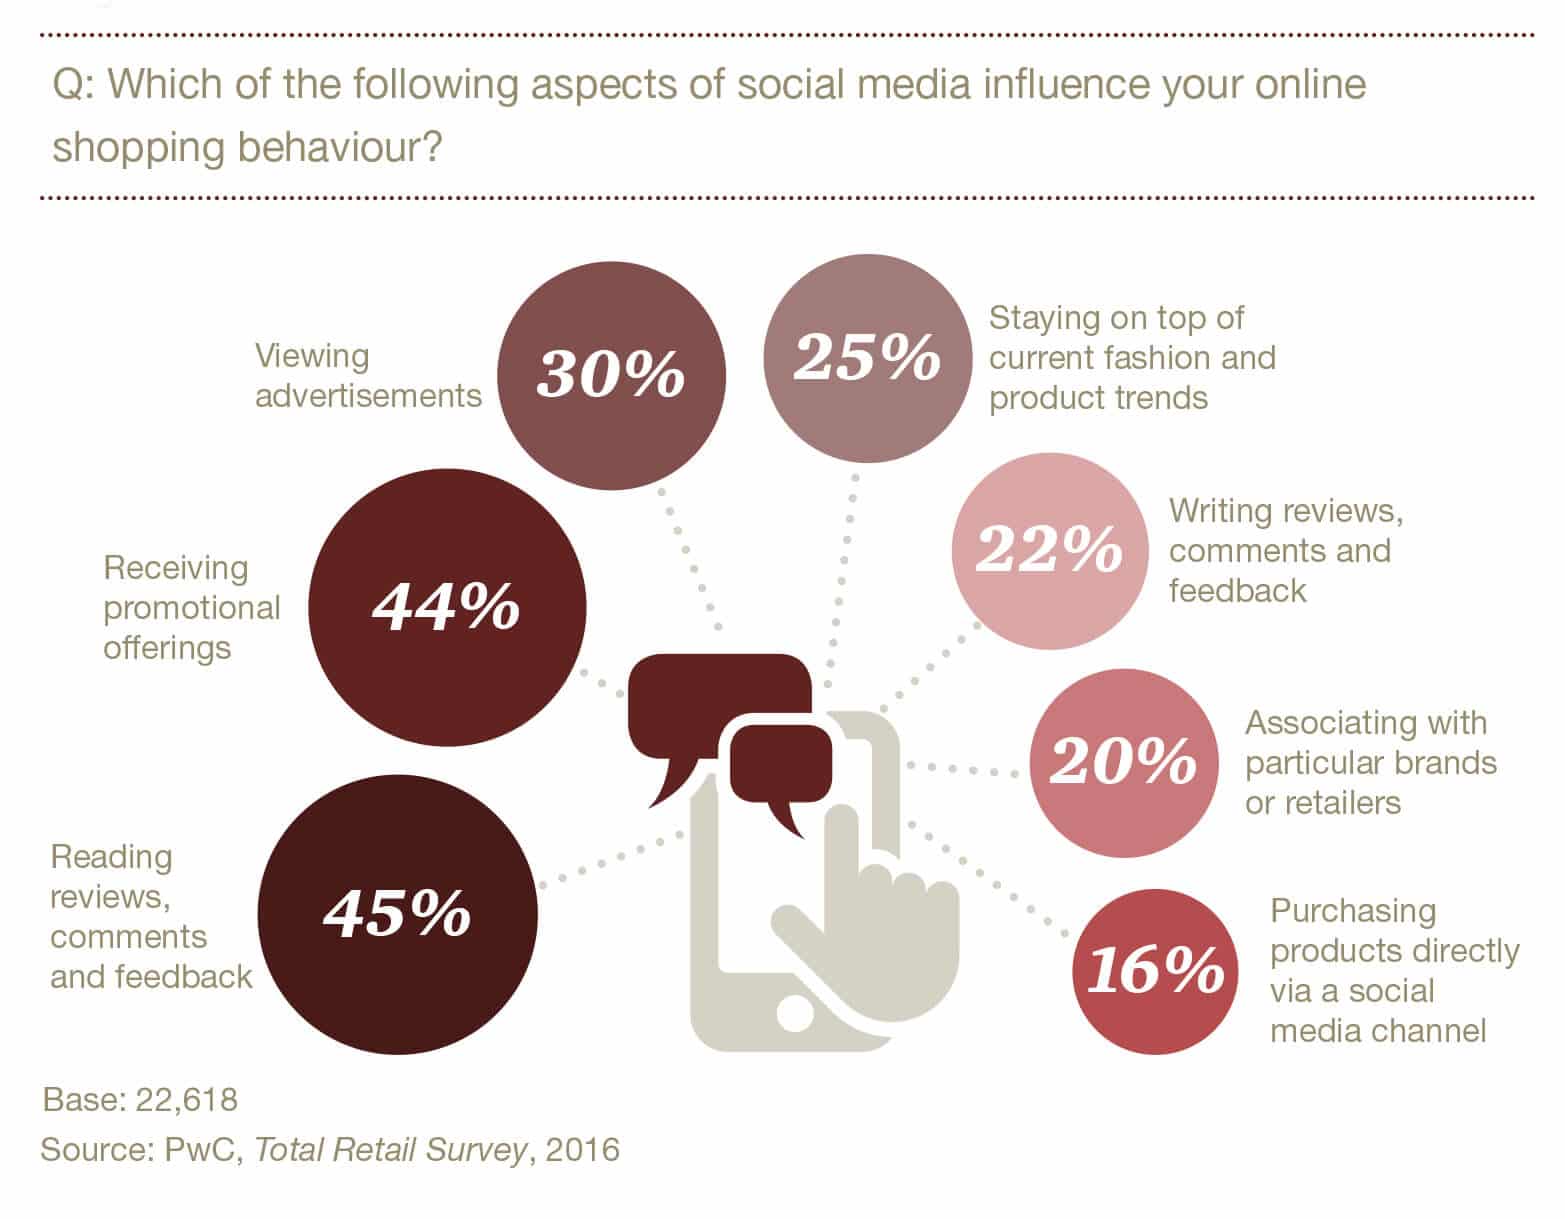 Aspects of Social Media Influencing Online Shopping Behaviour